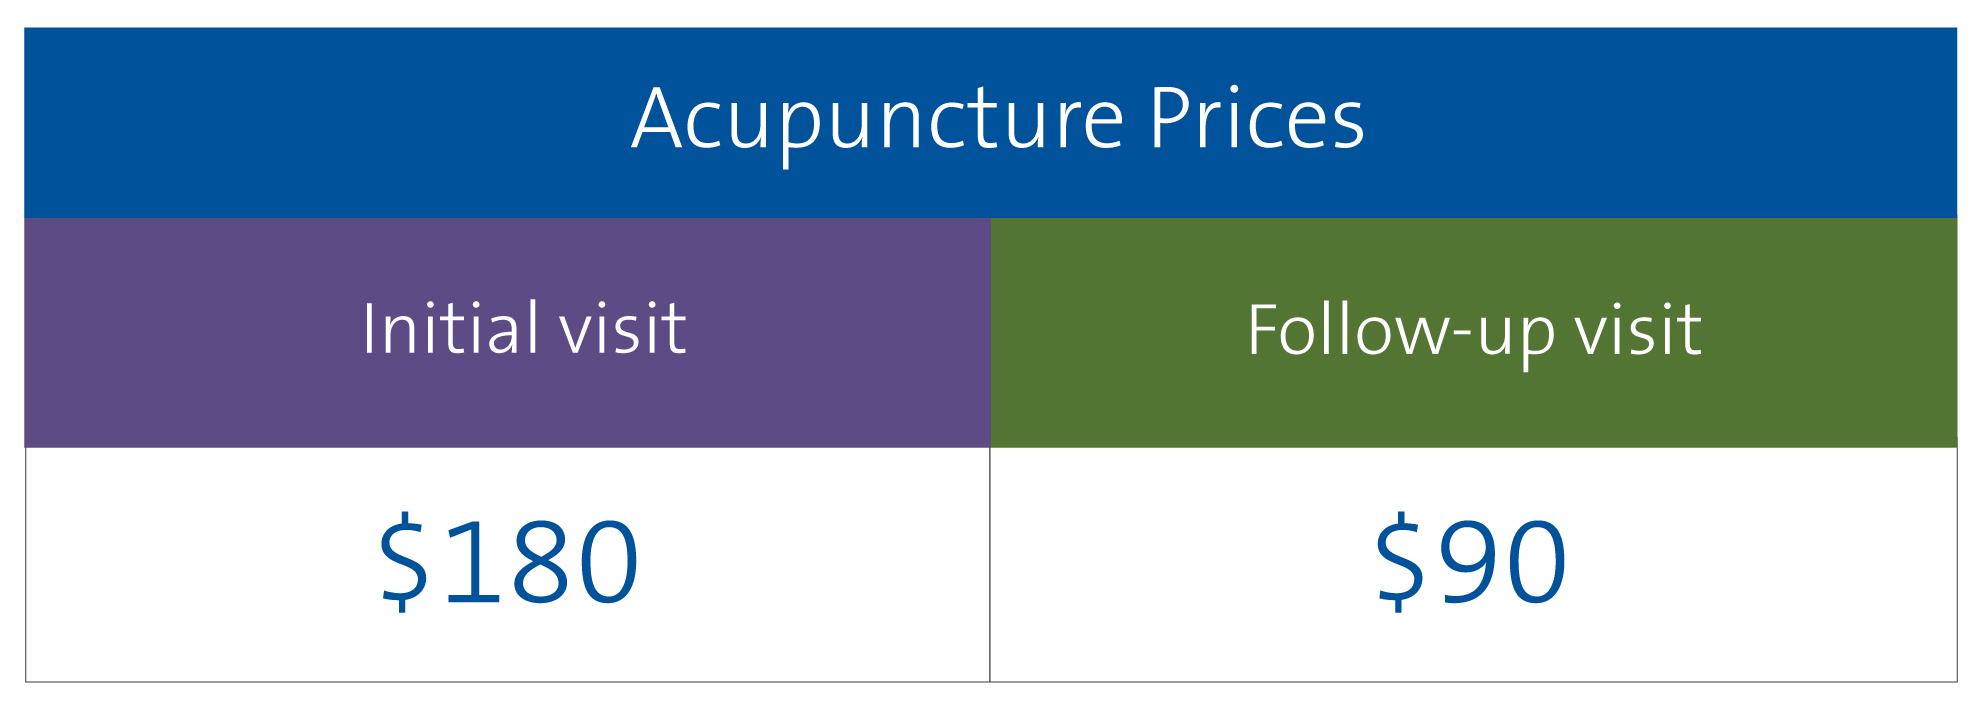 Acupuncture pricing at Duke Integrative Medicine